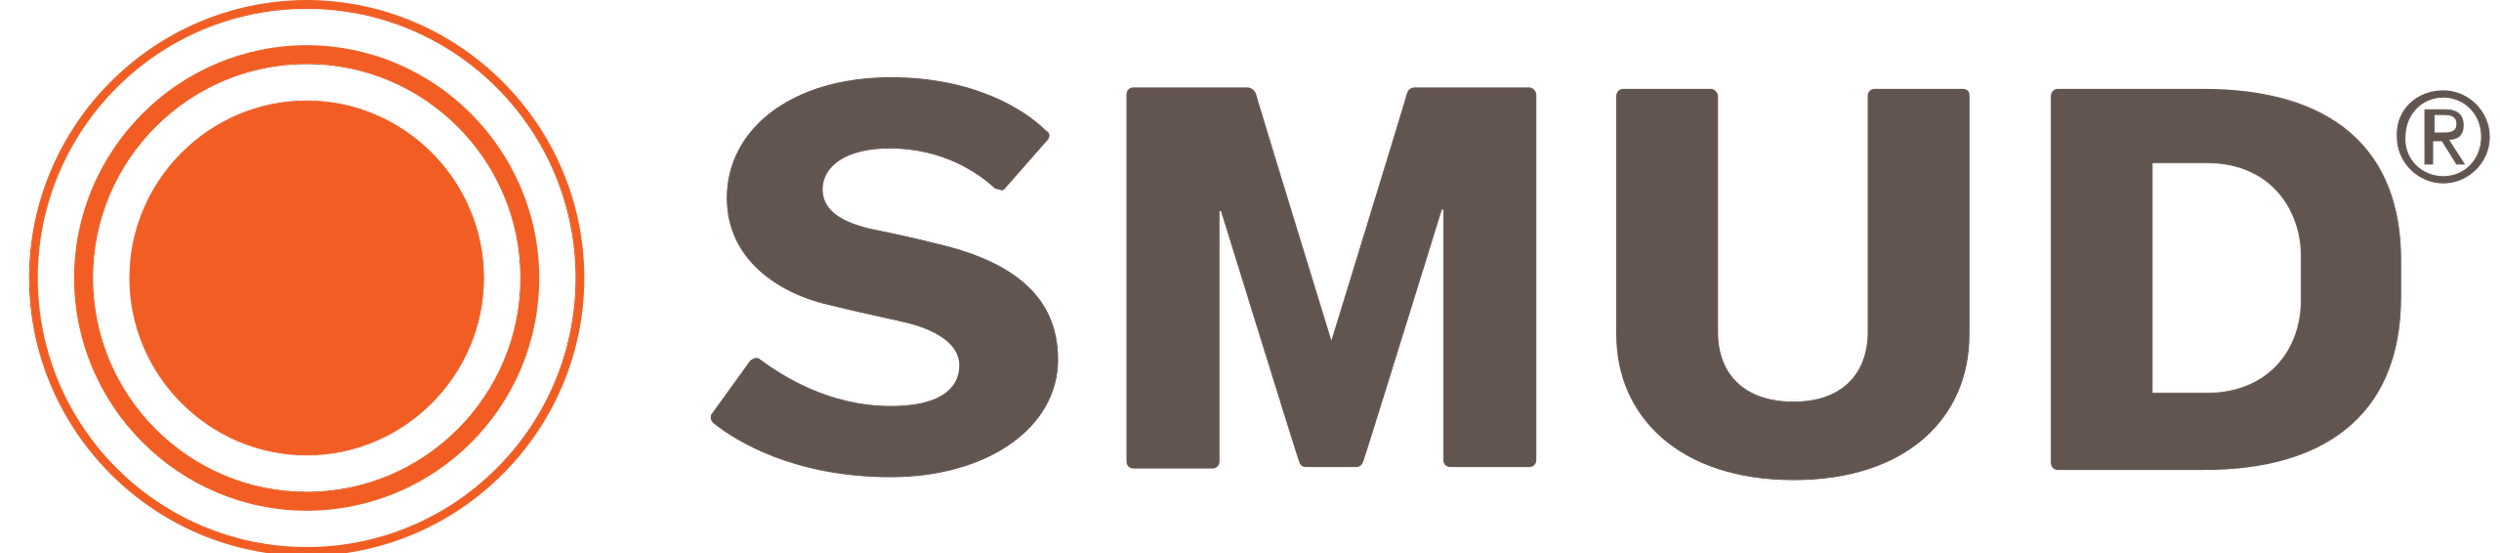 SMUD logo.png